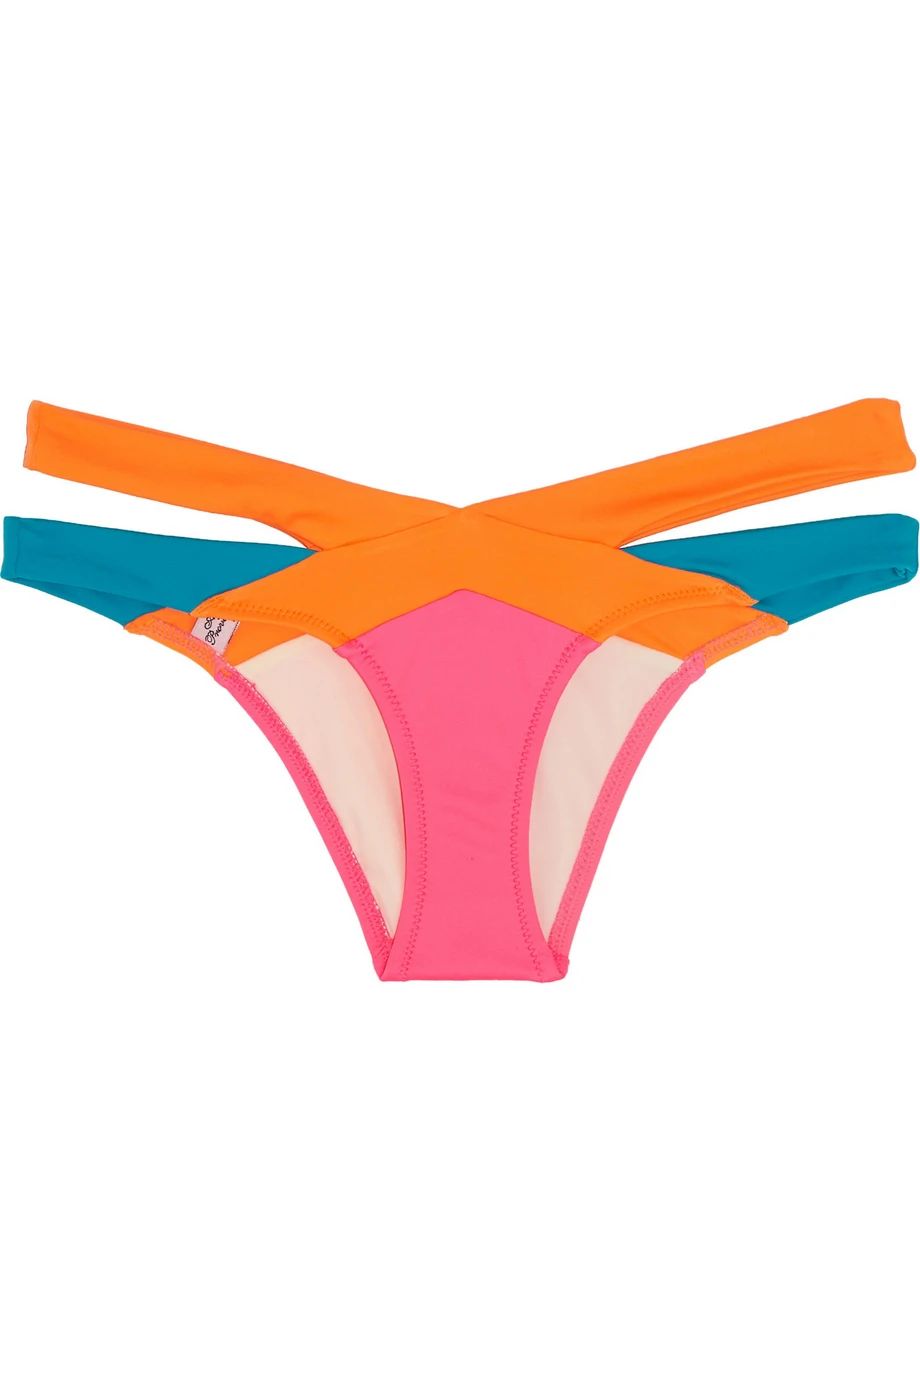 Agent Provocateur Mazzy Popstar cutout bikini briefs, Women's, Size: 3 | NET-A-PORTER (UK & EU)